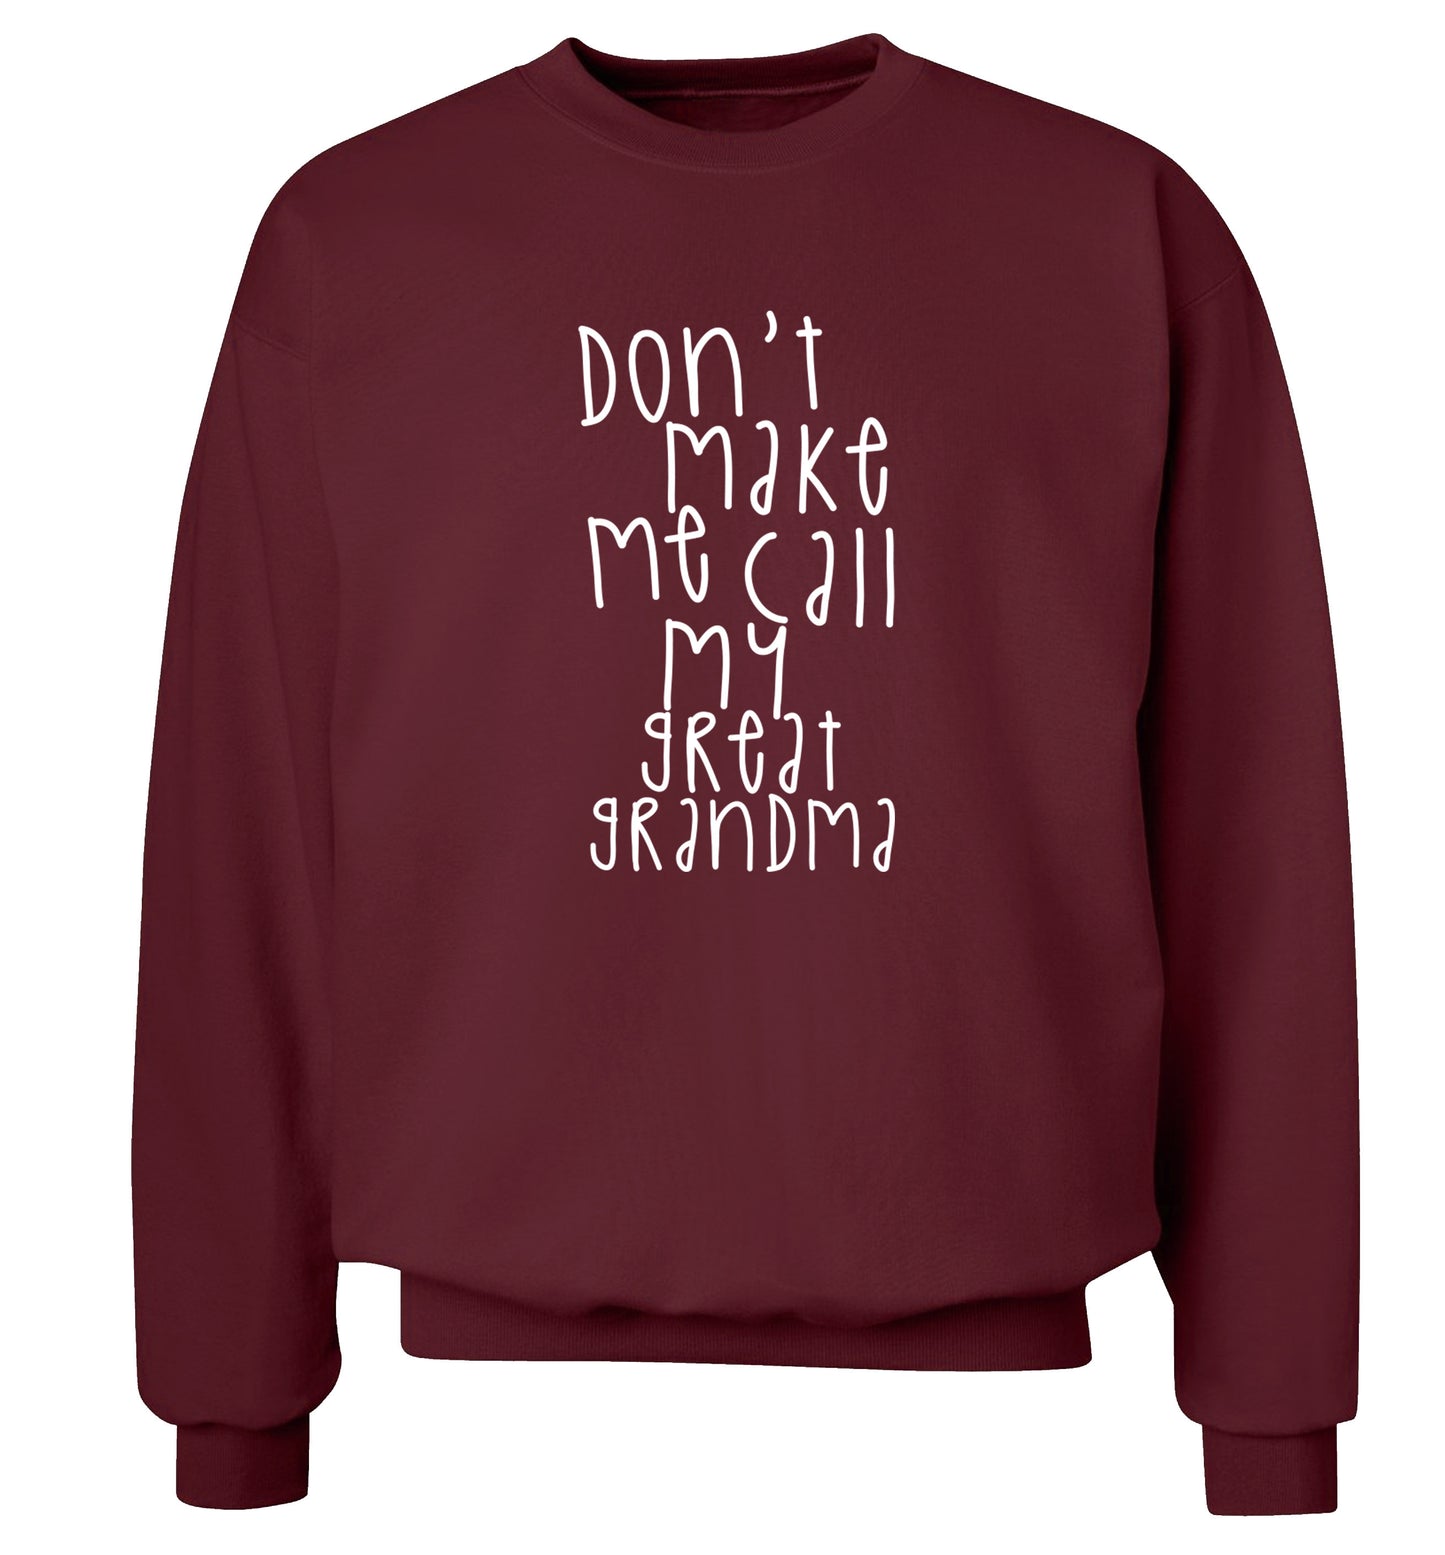 Don't make me call my great grandma Adult's unisex maroon Sweater 2XL